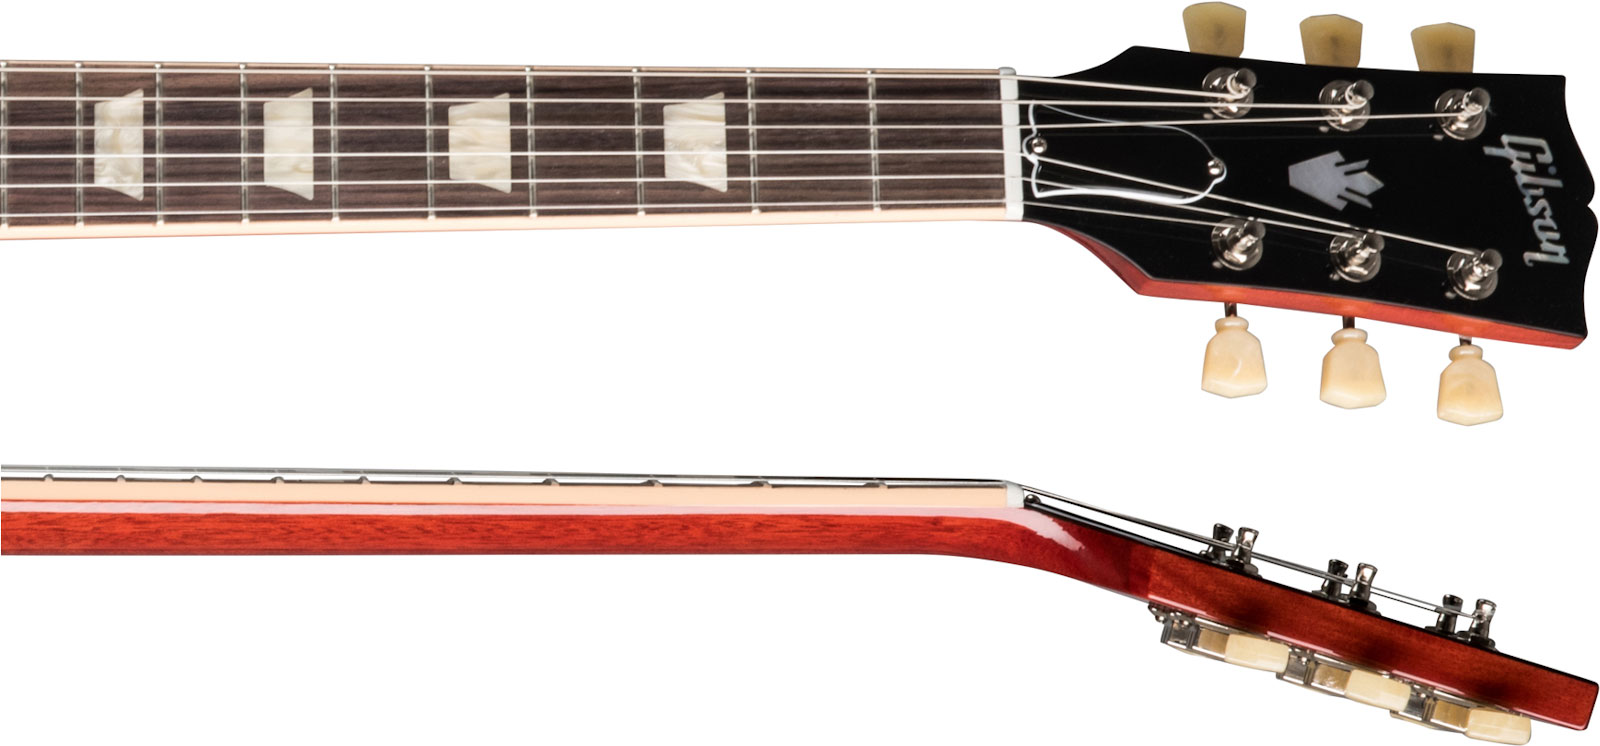 Gibson Sg Standard '61 Maestro Vibrola Original 2h Trem Rw - Retro-rock elektrische gitaar - Variation 2